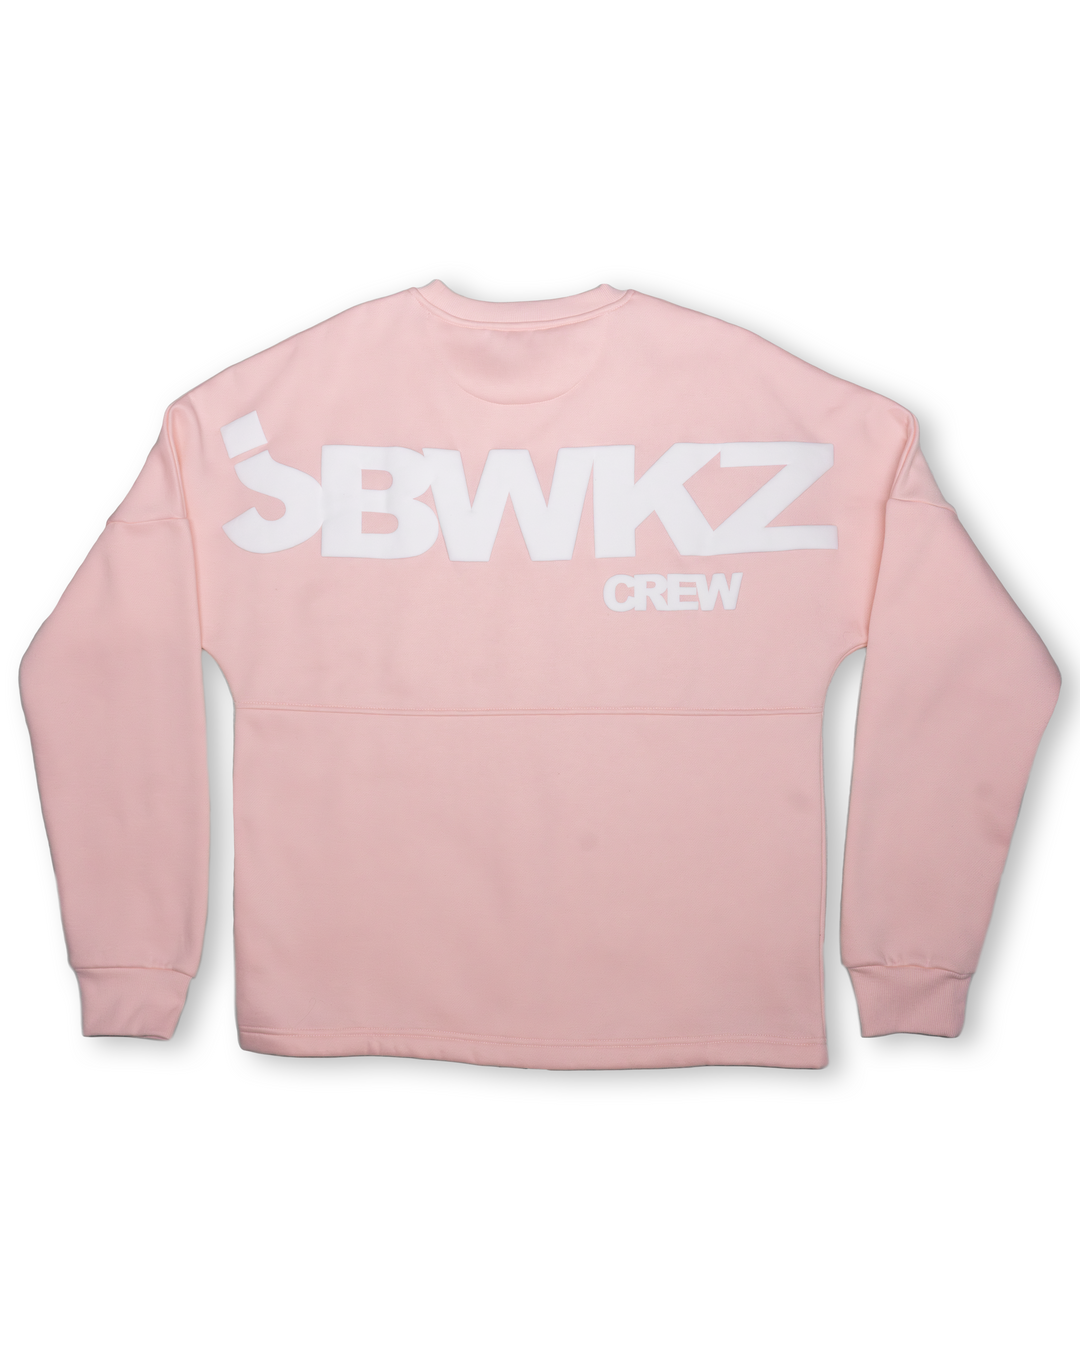 JBWKZ- Pink Pullover Crew